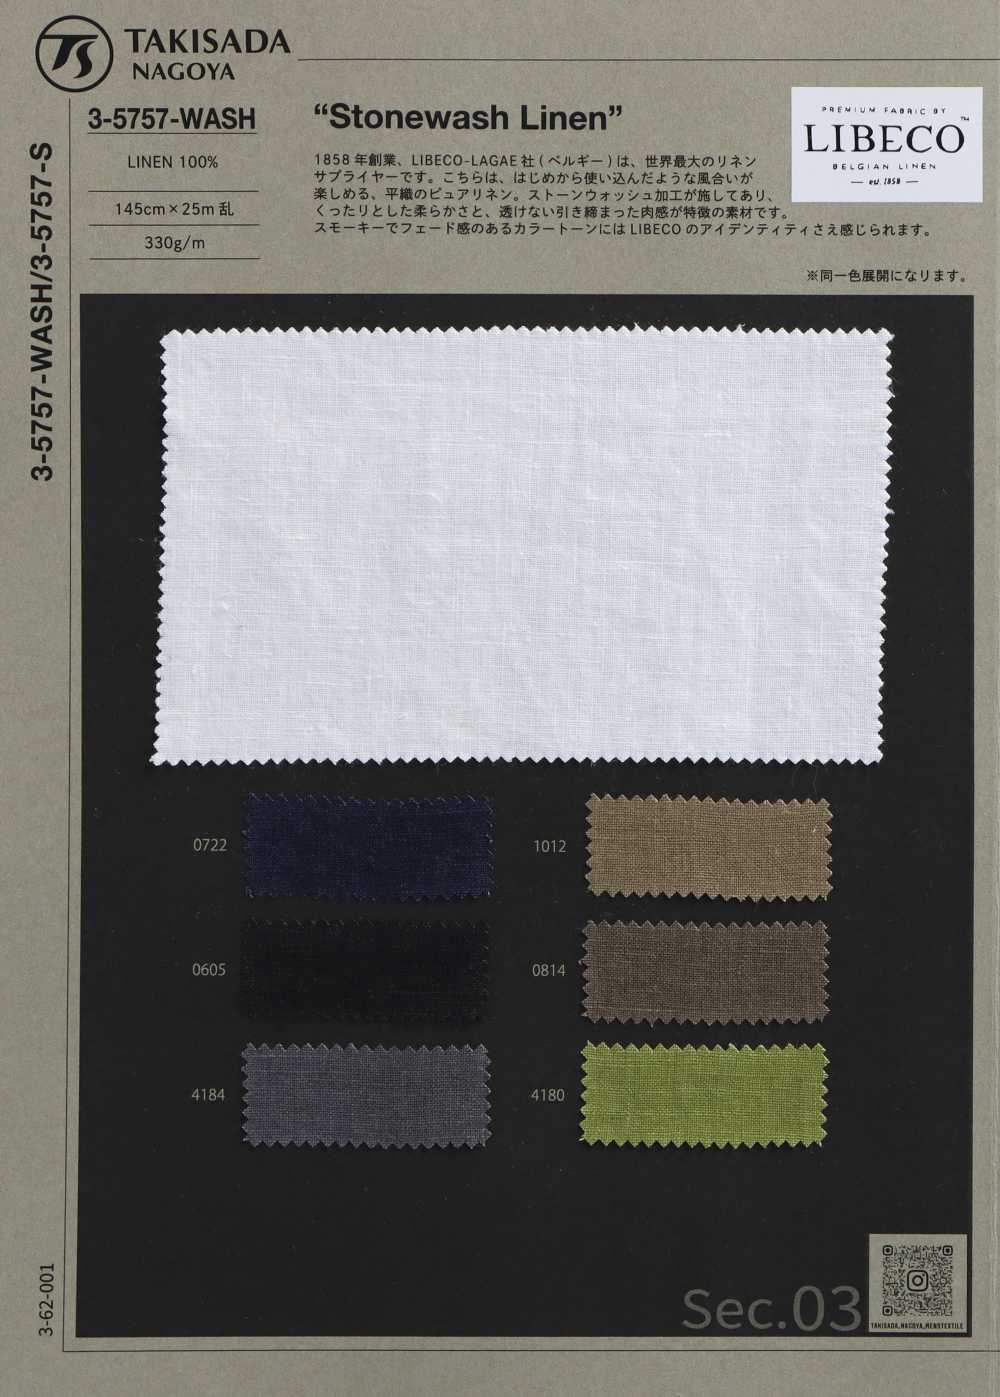 3-5757-WASH BELGIUM LINEN TROPICAL STONEWASH LINEN LIBECO Belgian Linen Linen Tropical Soft Linen Stone Wash[Textile / Fabric] Takisada Nagoya